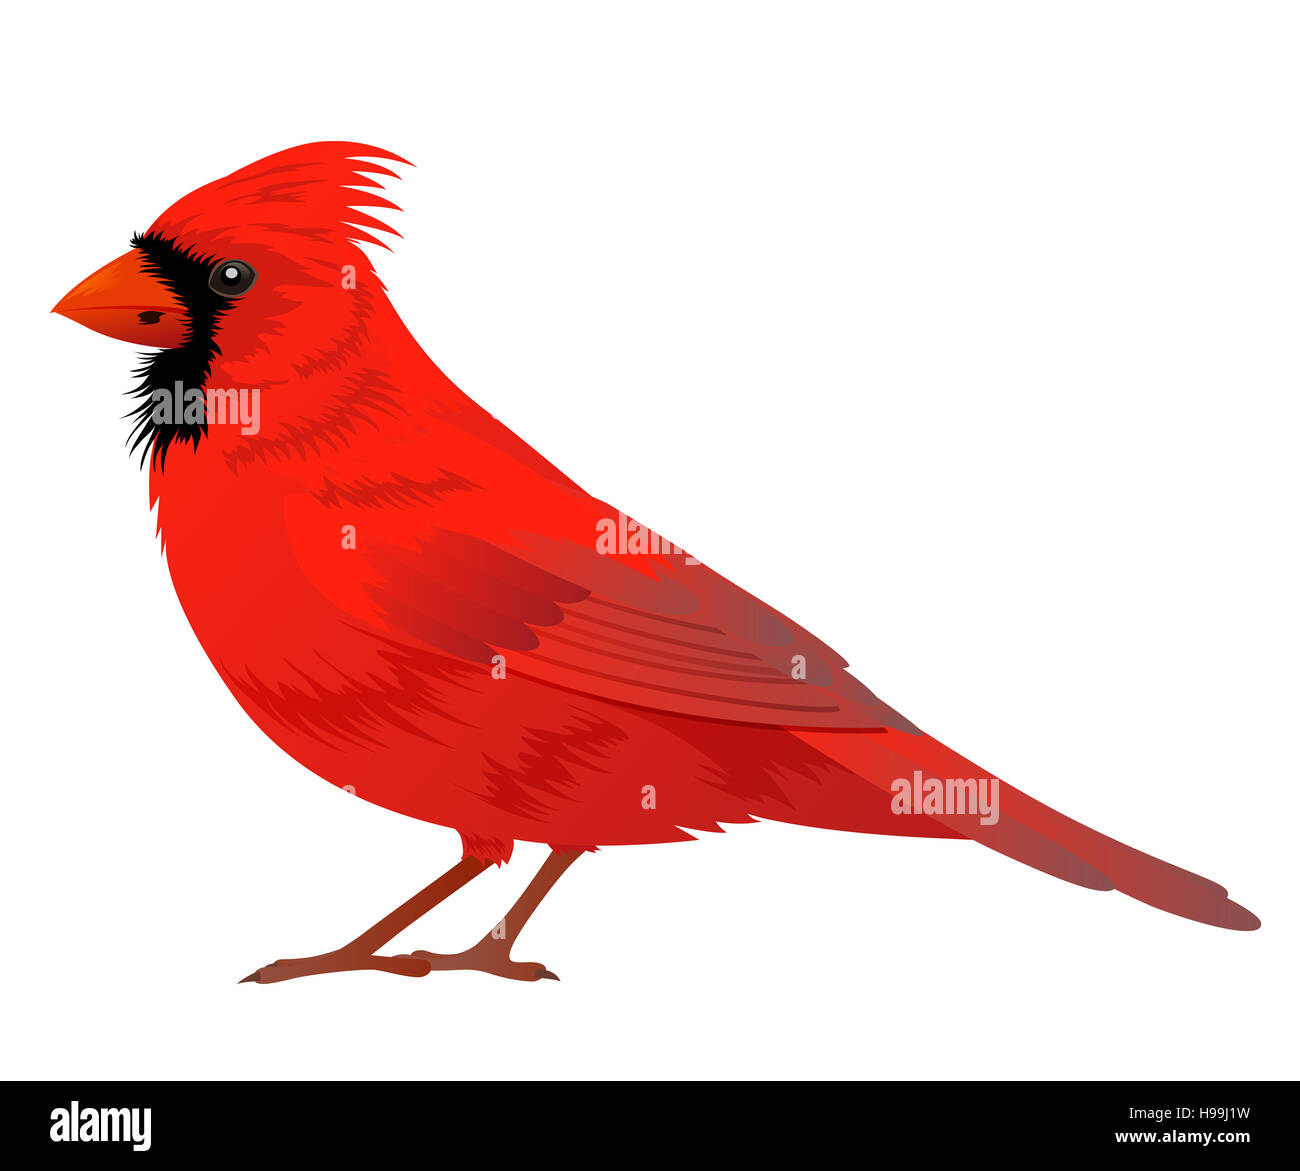 Northern Cardinal bird on a white background. Stock Photo